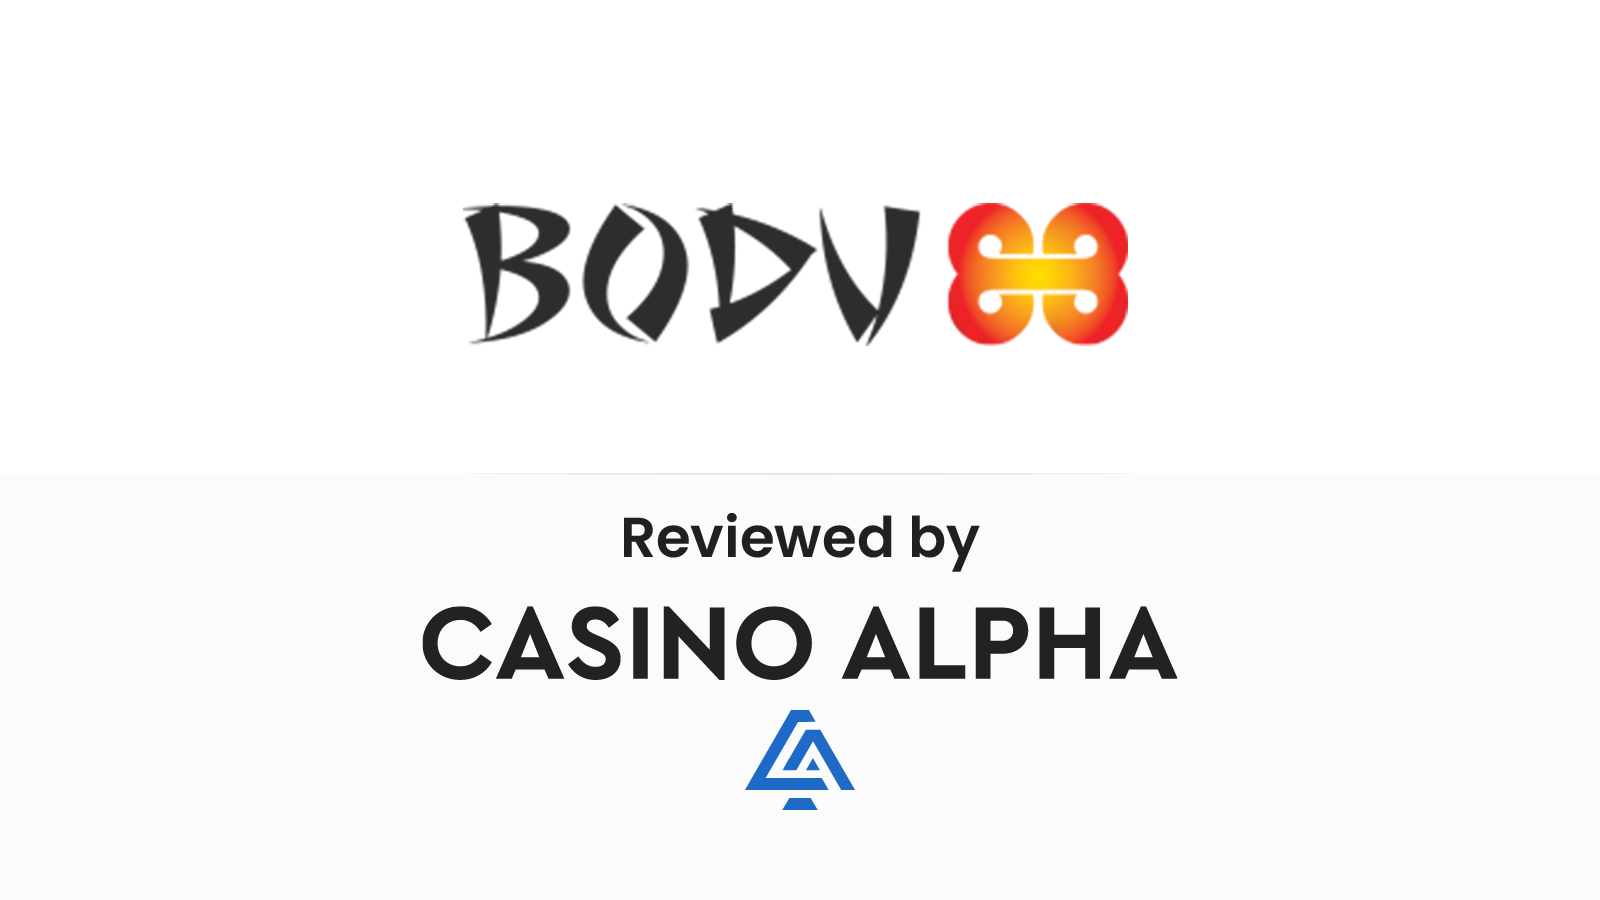 Bodu88 Casino Review & Bonus codes